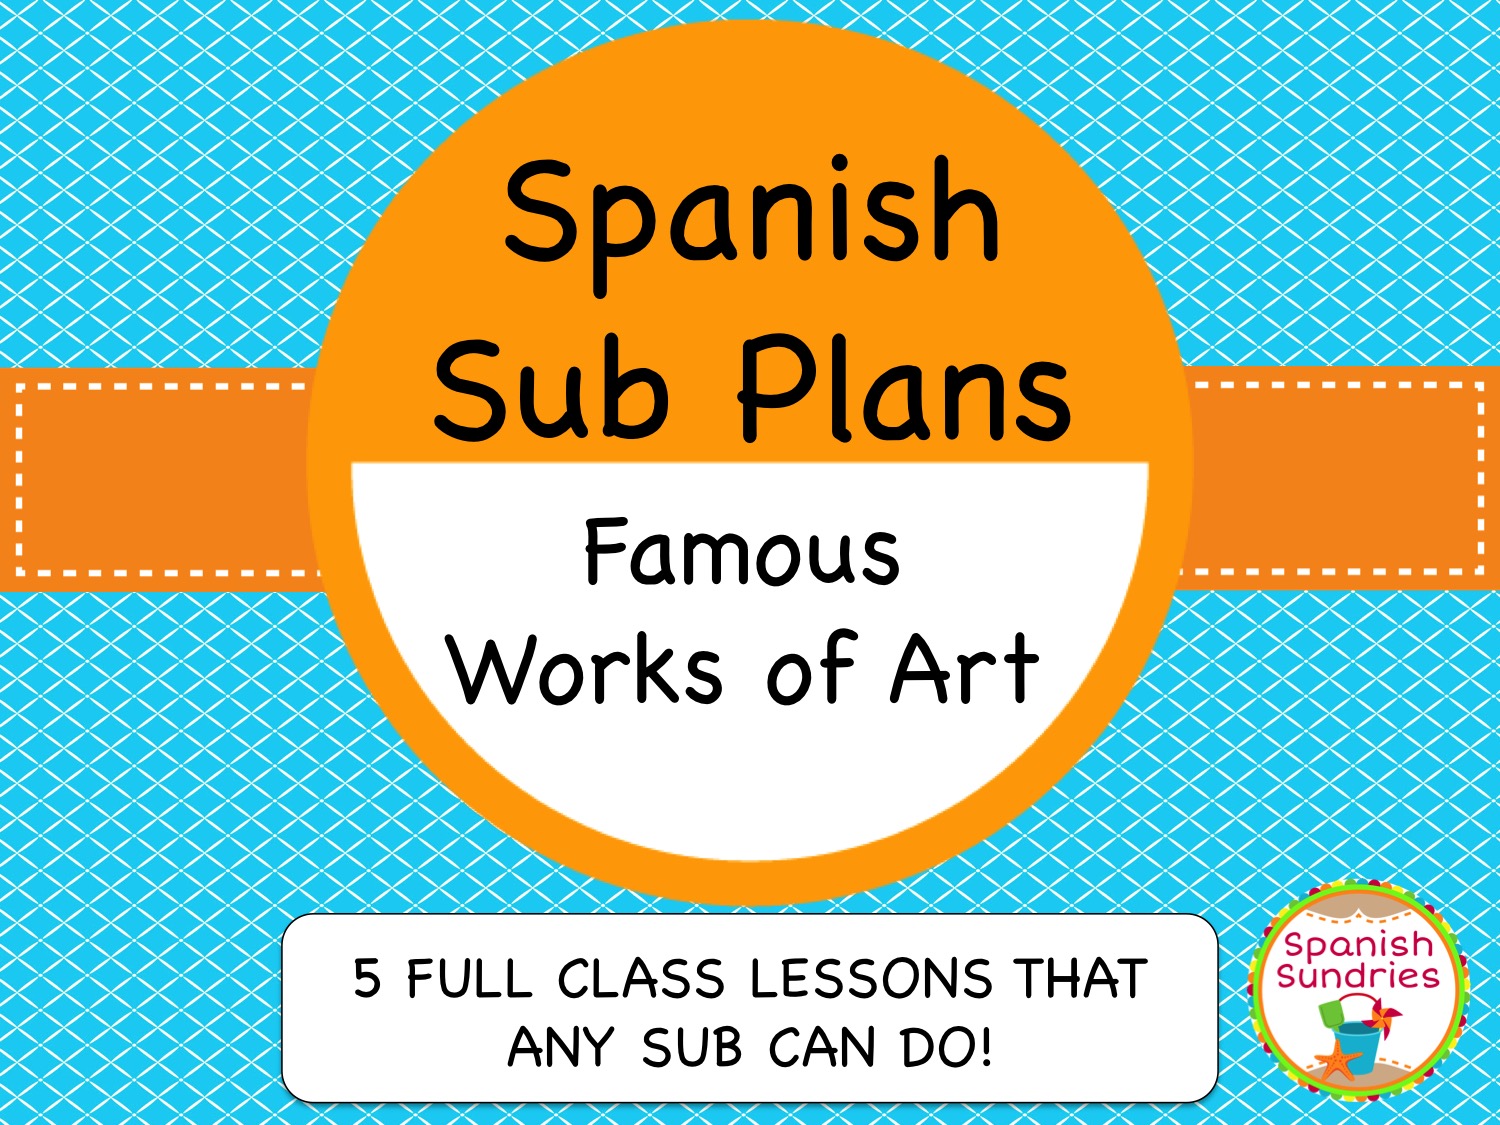 Spanish Sub Plans - Famous Works of Art